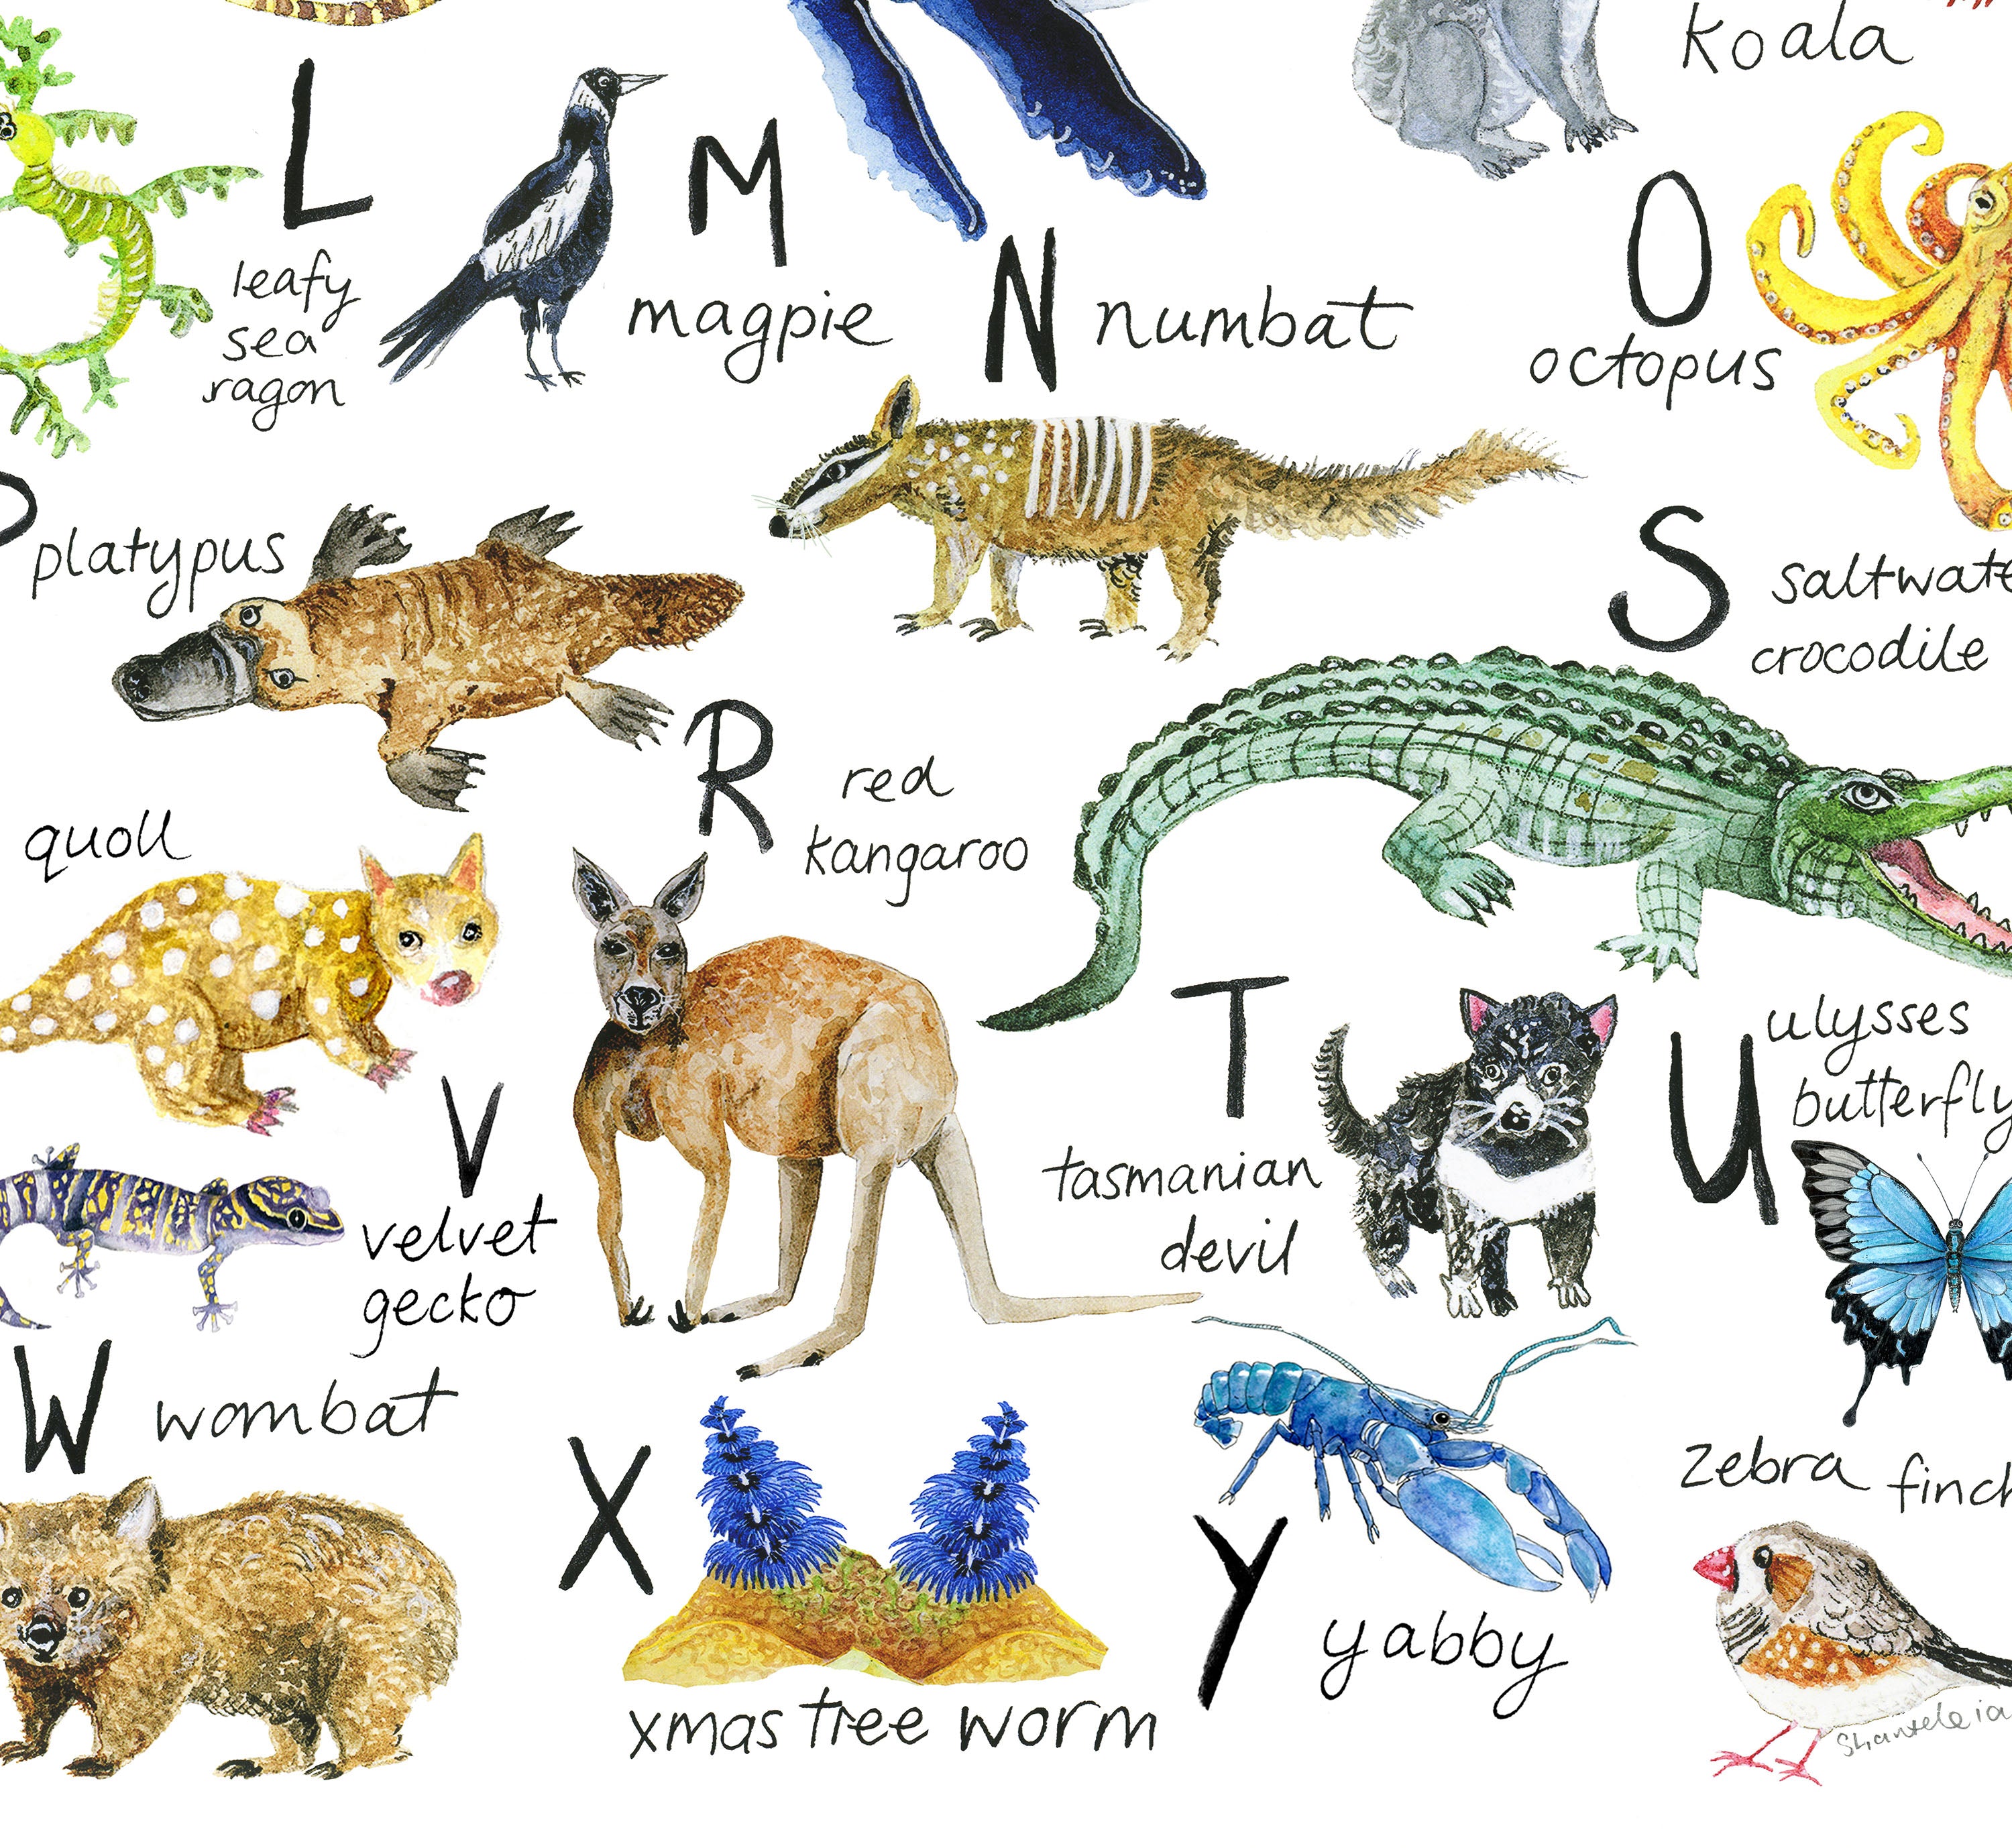 Australian animal alphabet print